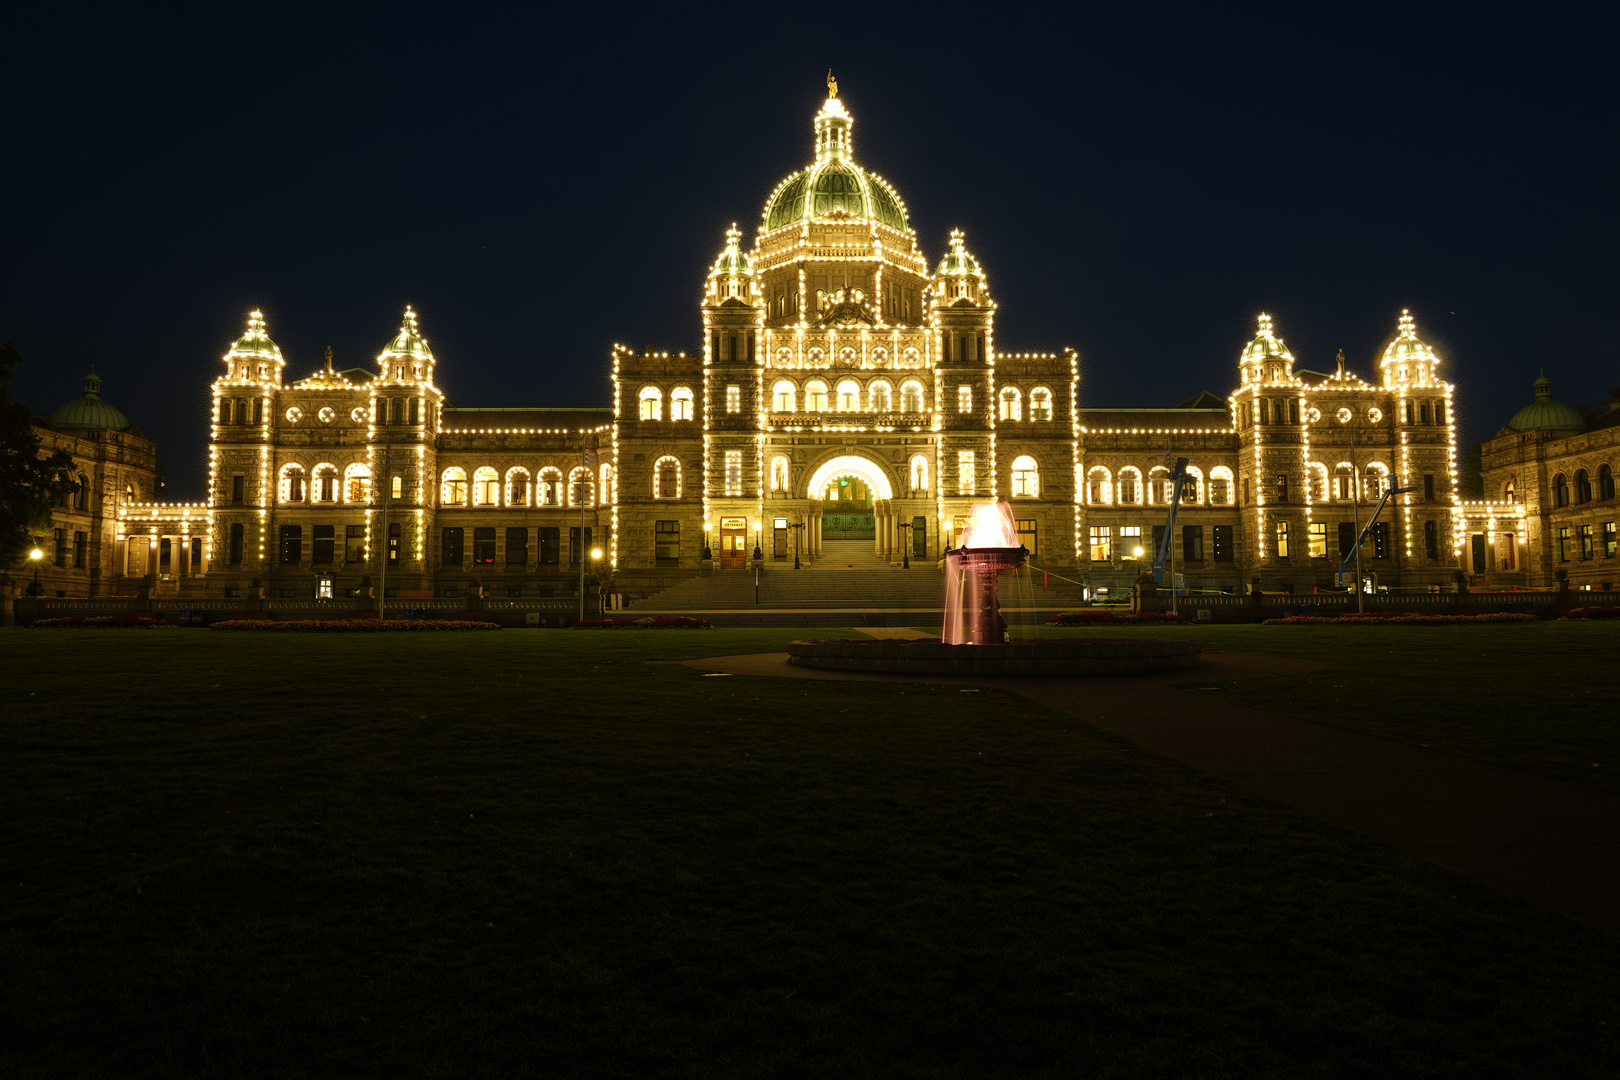 Parliament von British Columbia in Victoria auf Vancouver Island